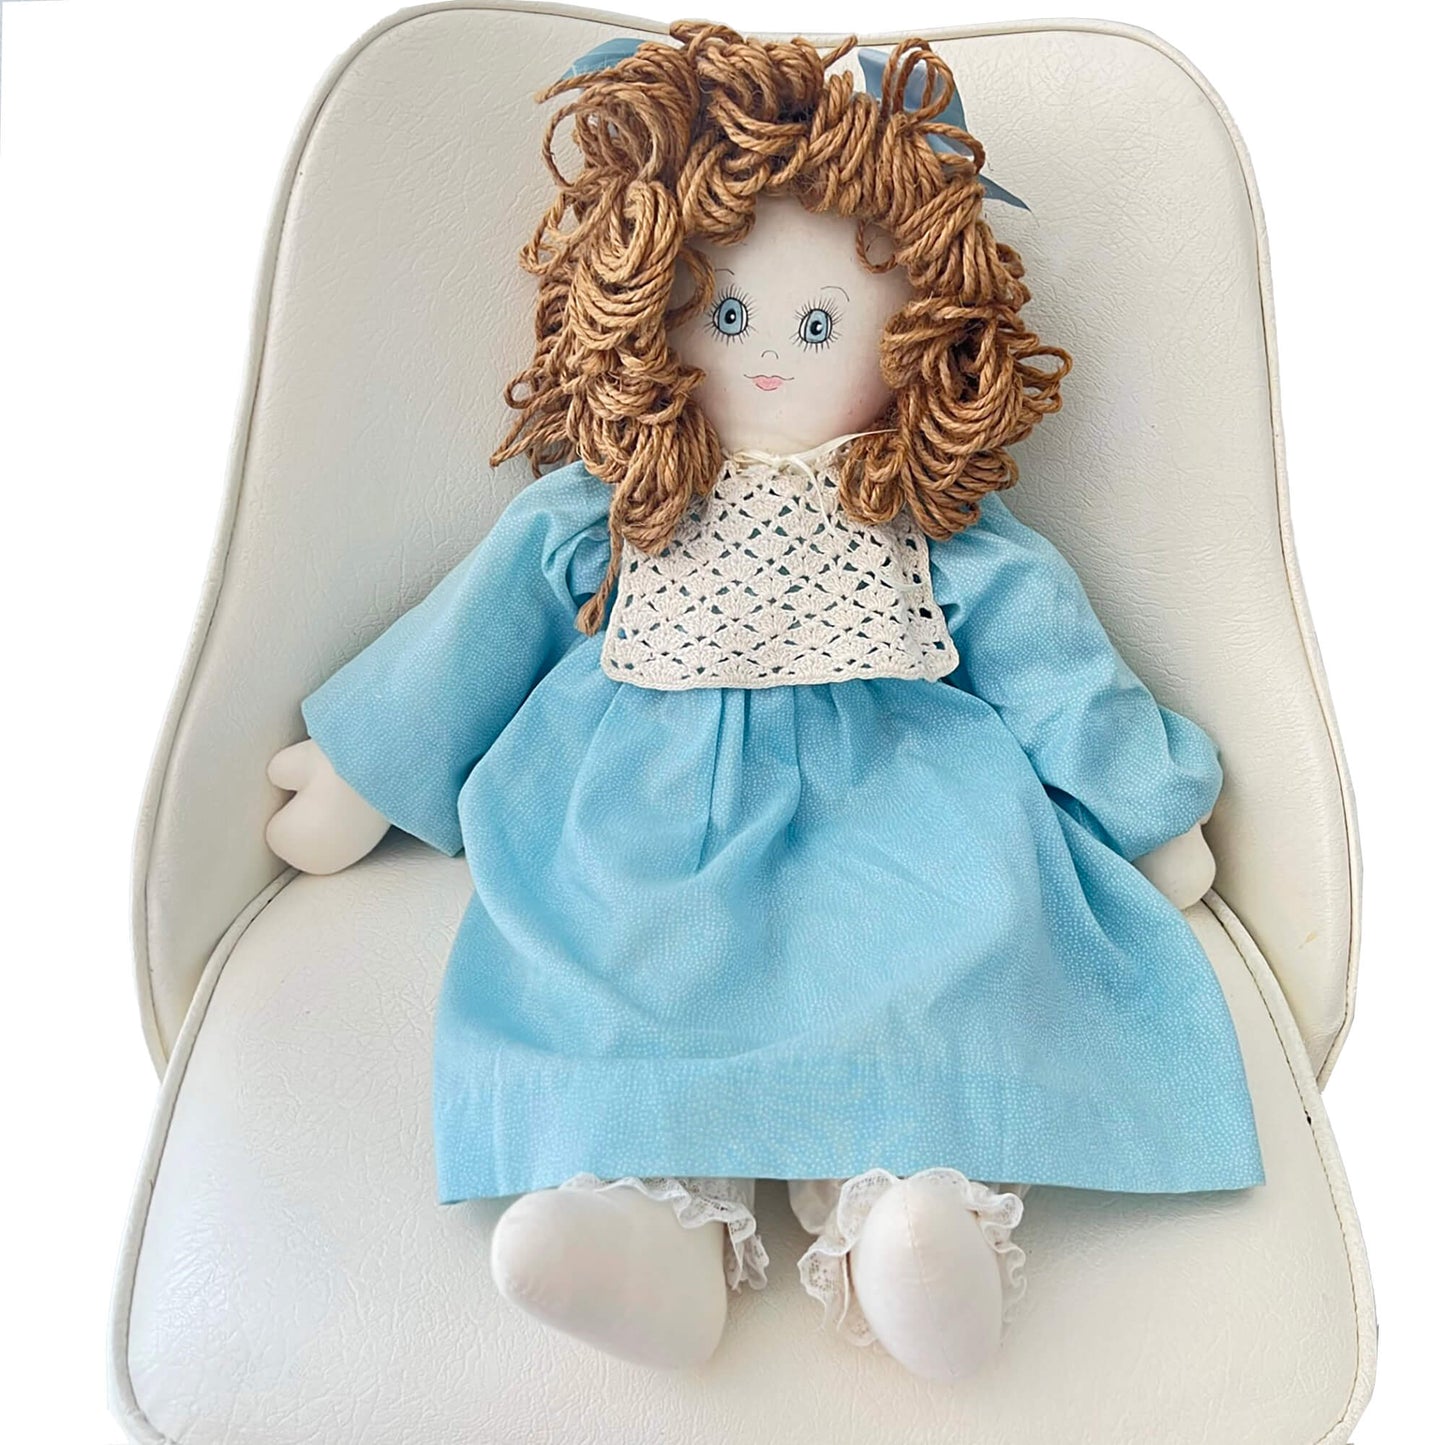 Ragamuffins-Handmade-Cloth-Doll-C.-Buehner-vintage.-Blue-eyes,-rope-hair. Shop-eBargainsAndDeals.com.